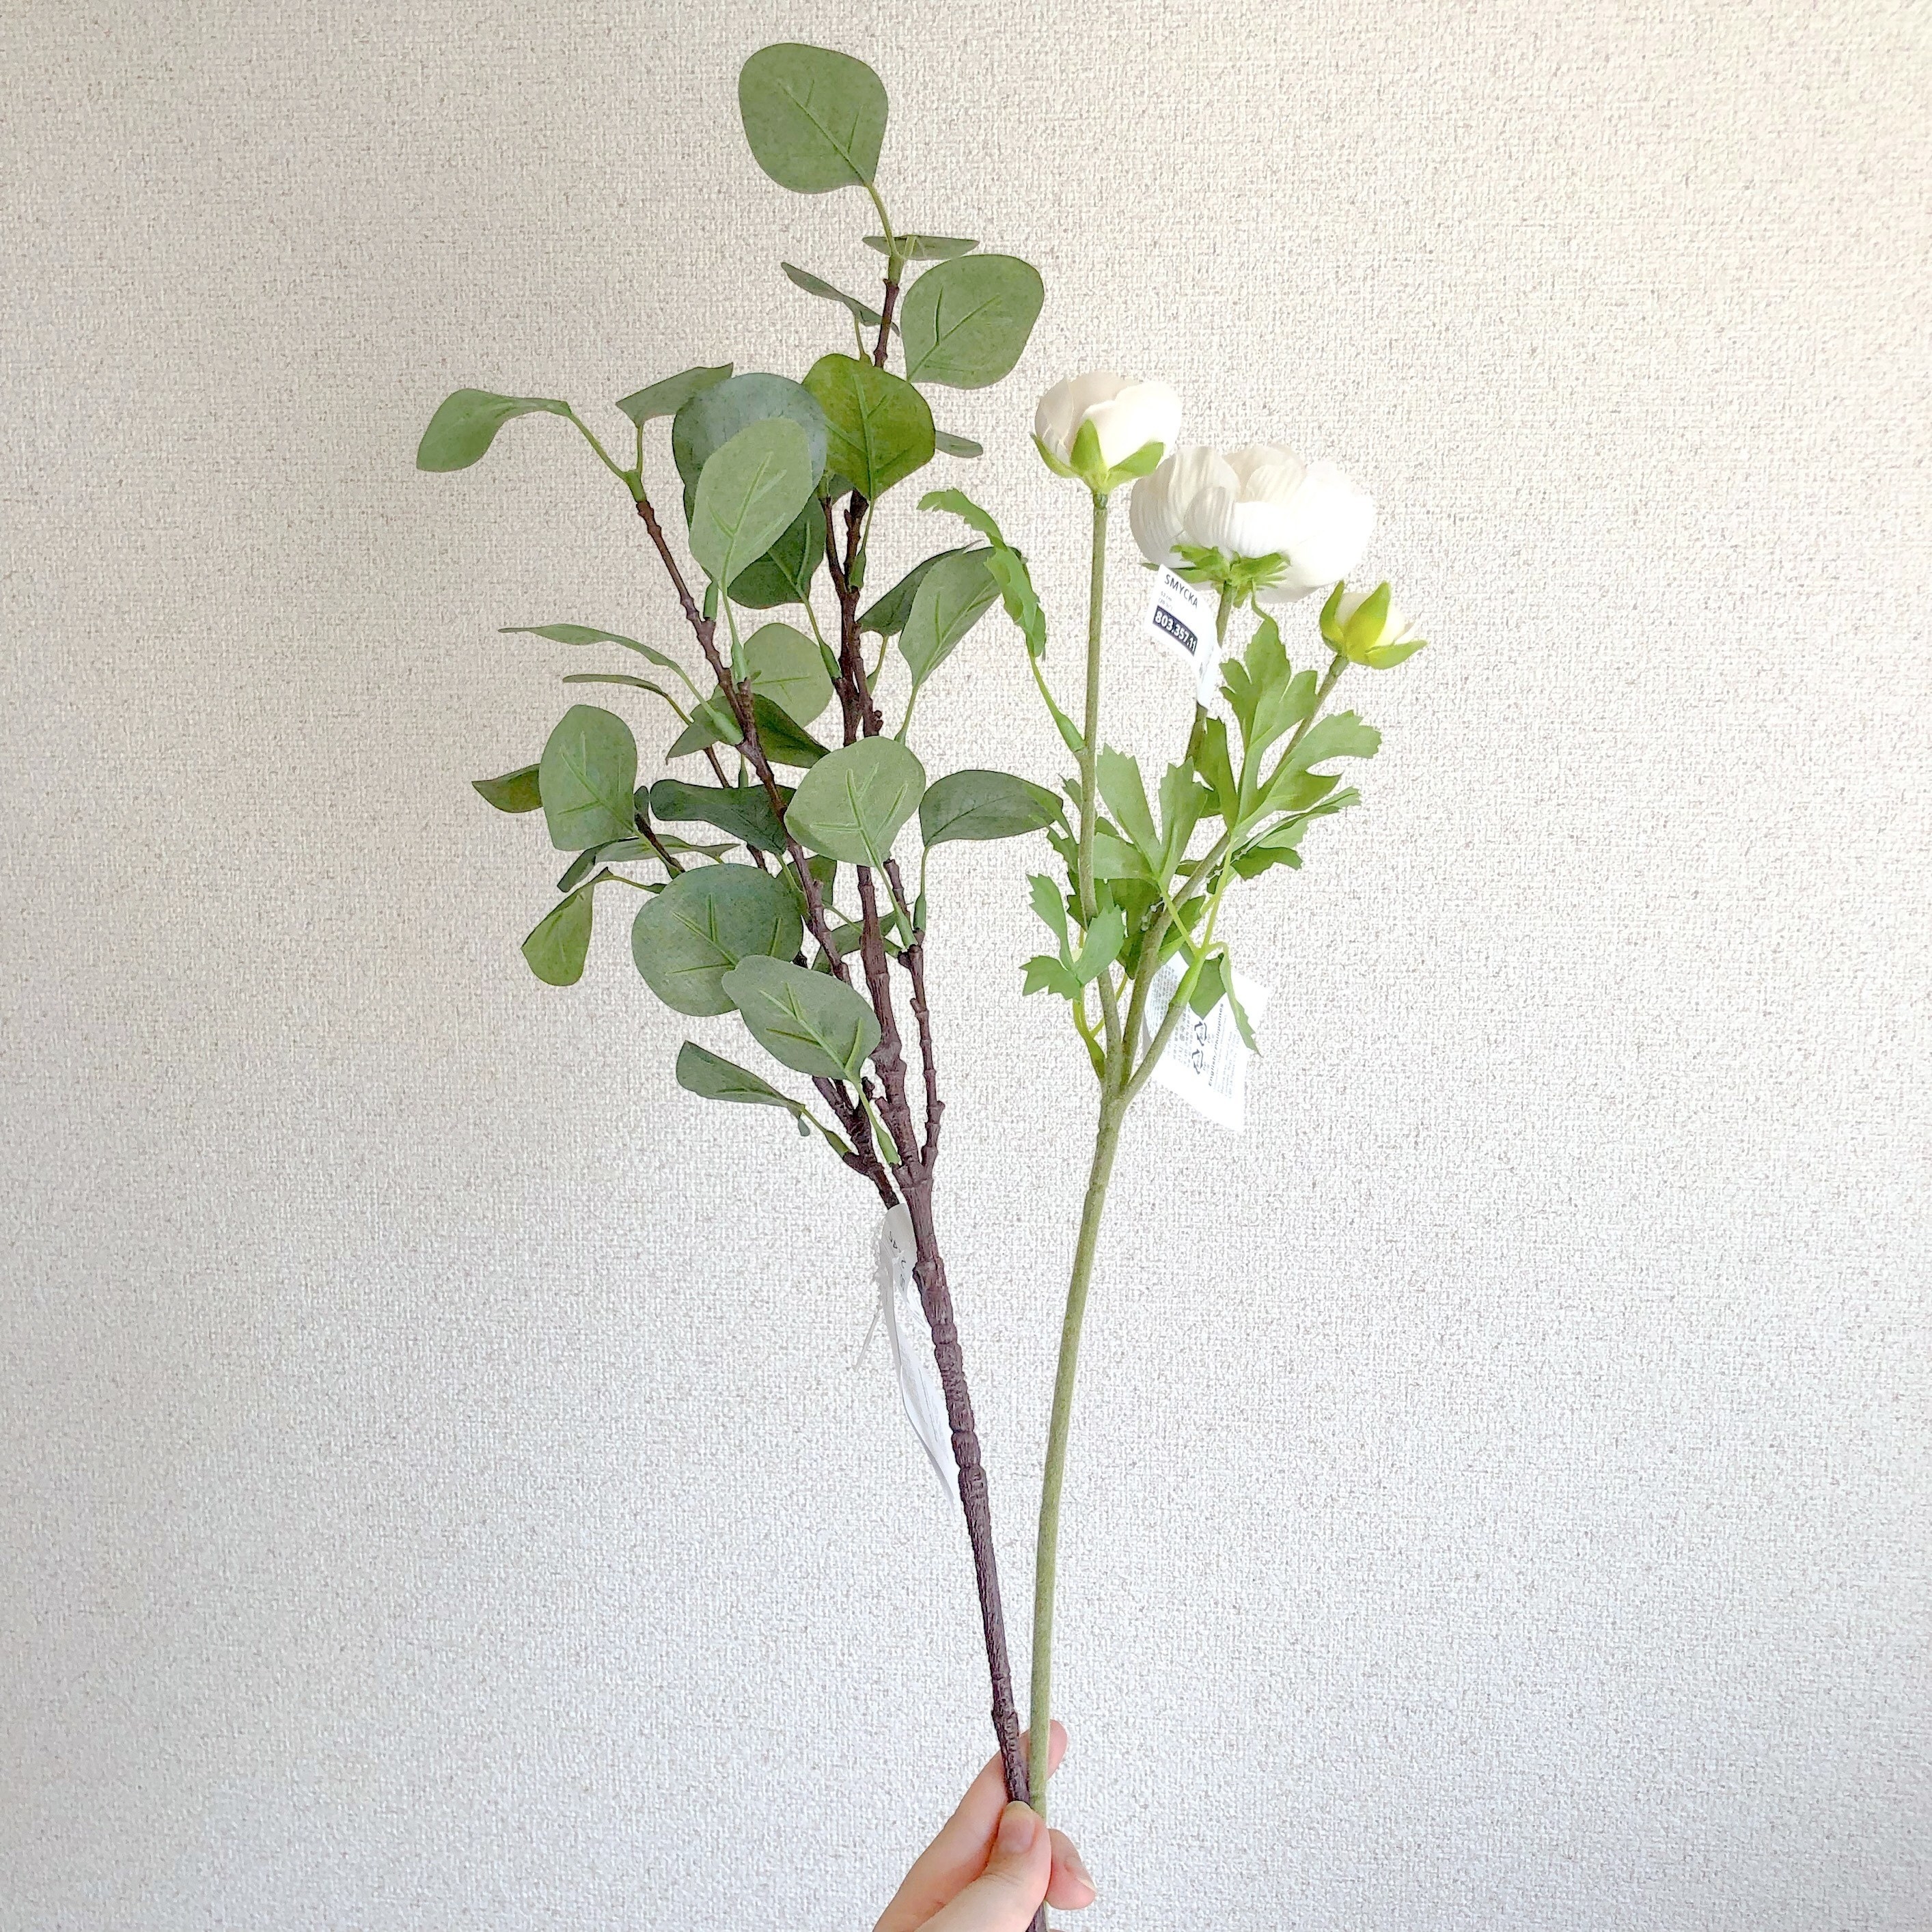 IKEA（イケア）のおすすめ造花「フェイクリーフ ユーカリ / グリーン（左）」「造花 ラナンキュラス / ホワイト（右）」